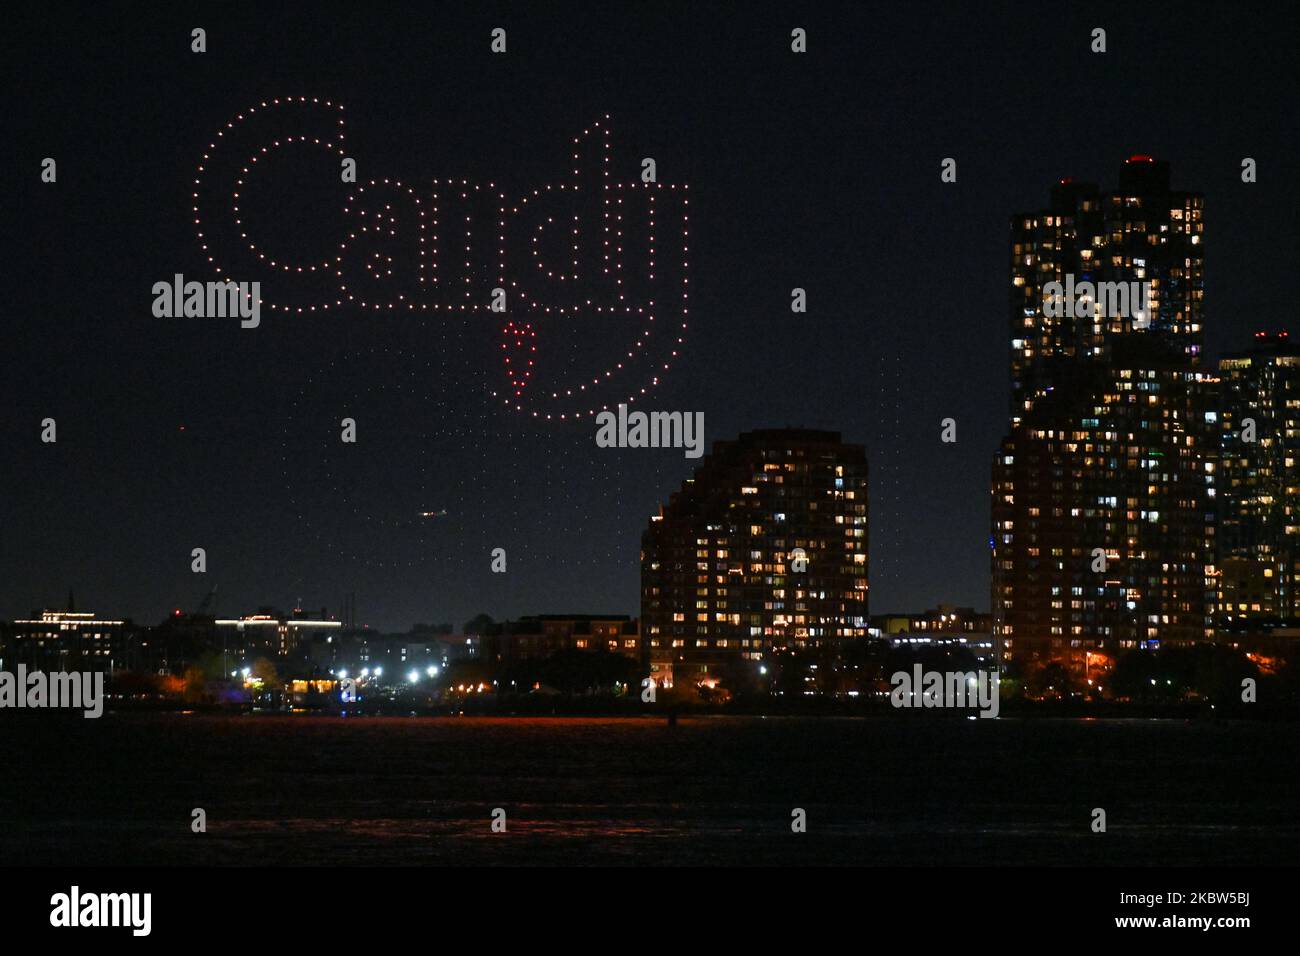 Candy Crush Saga 10th Anniversary (Windows, Mobile, Android, iOS